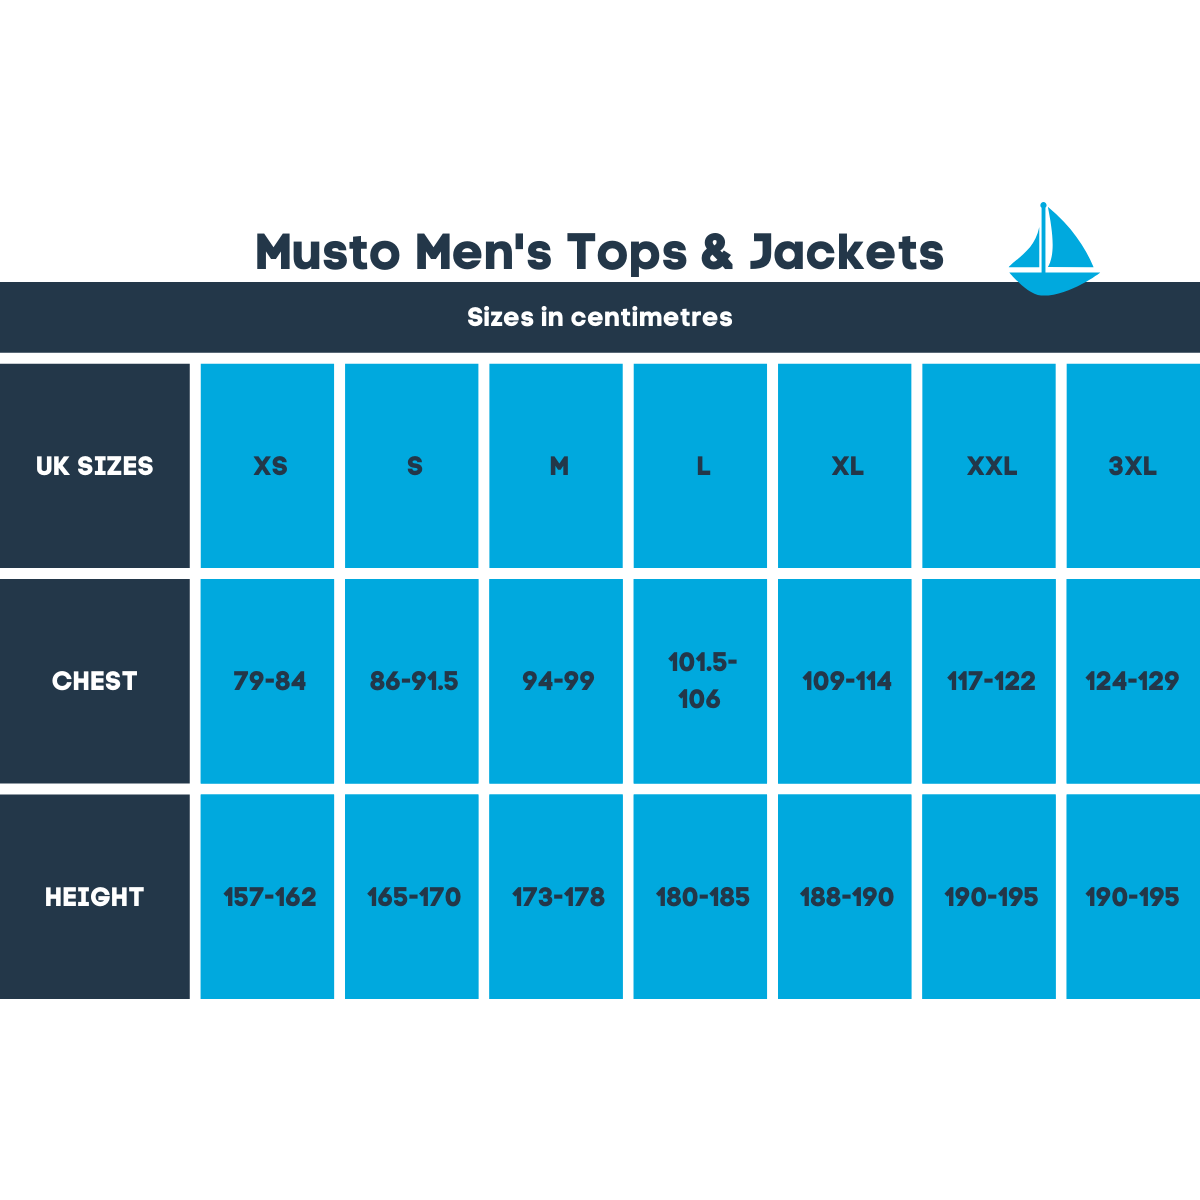 Musto Men's MPX Gore-Tex Pro Offshore Jacket 2.0